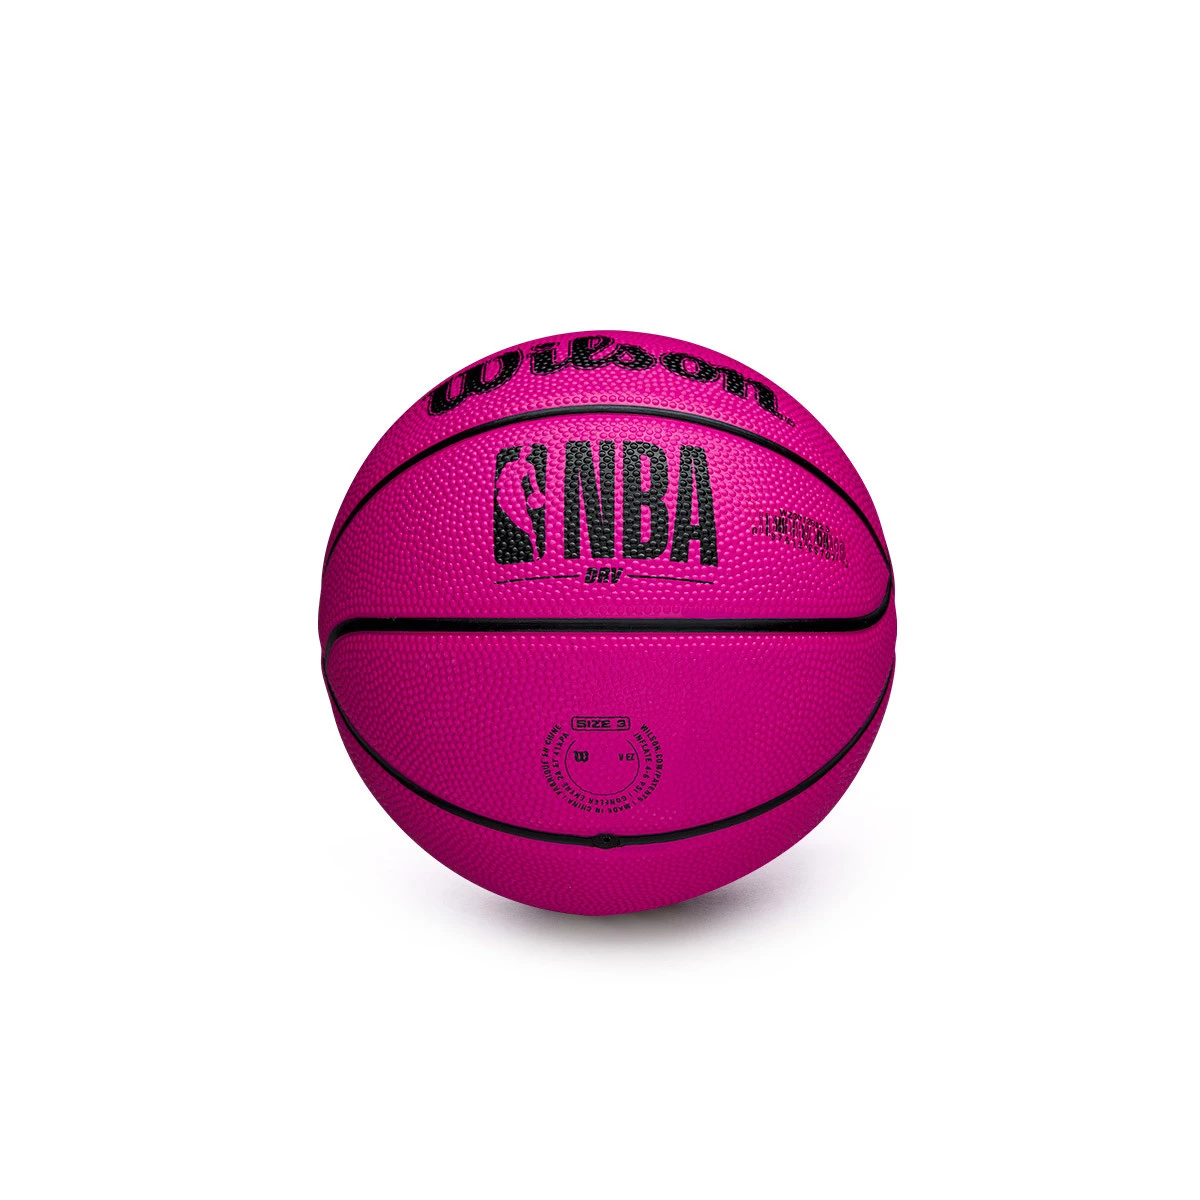 Balon de Basket Wilson NBA Drive NO.5 - Wilson